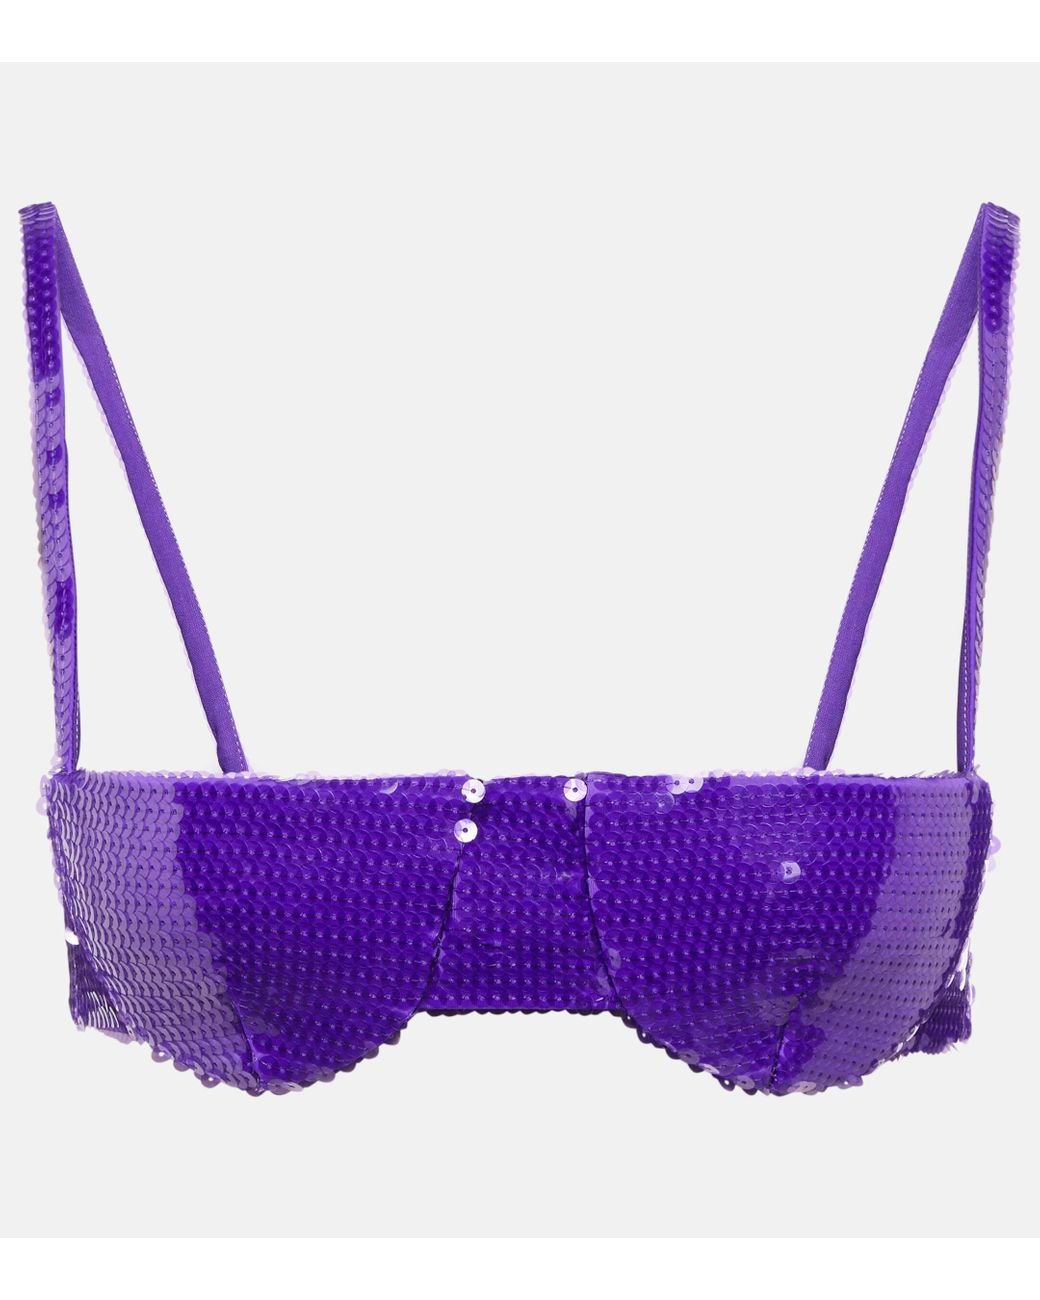 LAQUAN SMITH Sequined Bra Top in Purple